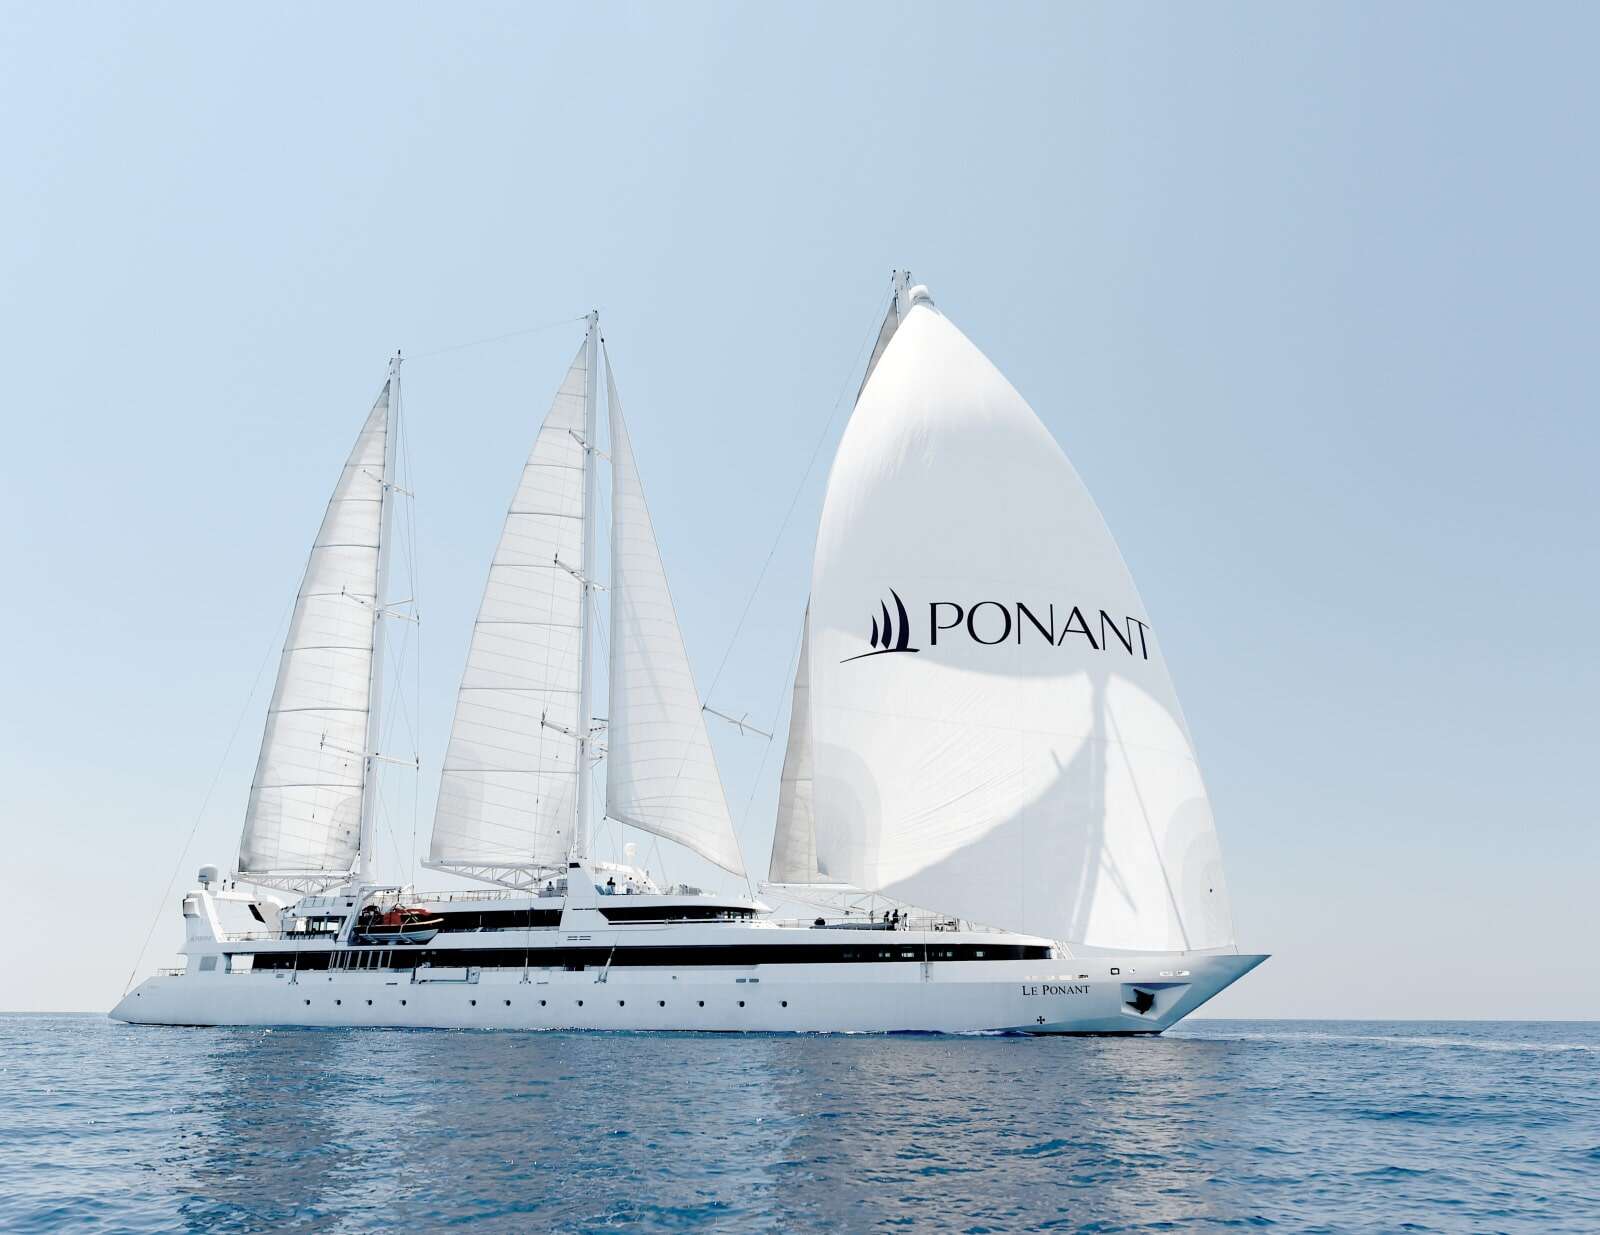 Ponant Unveils Refurbished Le Ponant Sailing Ship